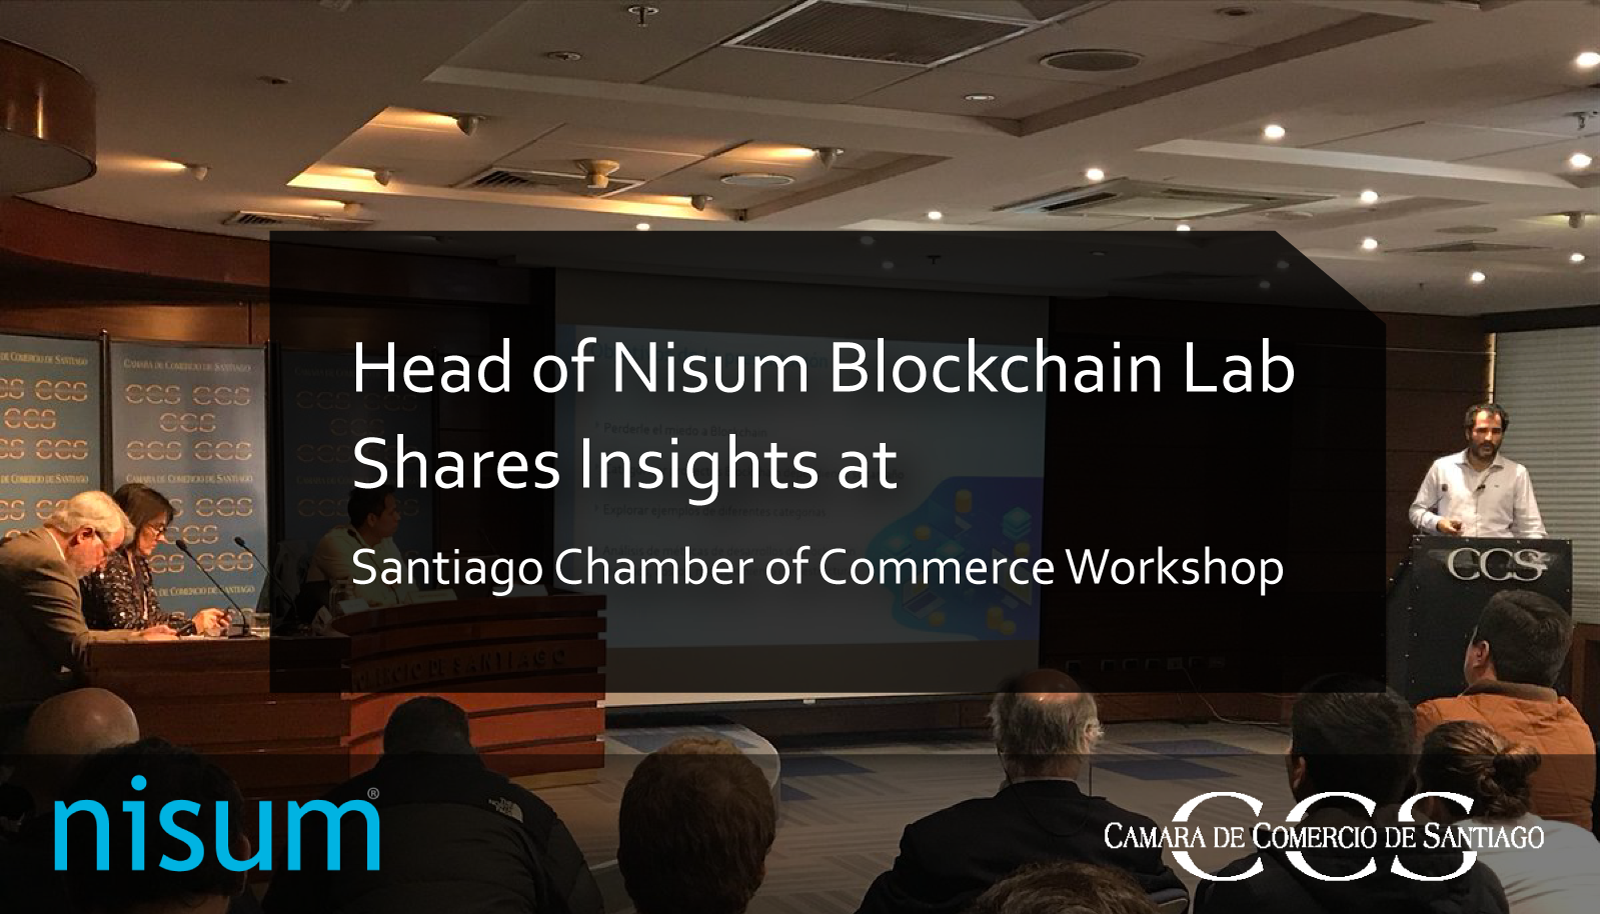 santiago-chamber-commerce-invites-head-nisum-blockchain-lab-share-insights